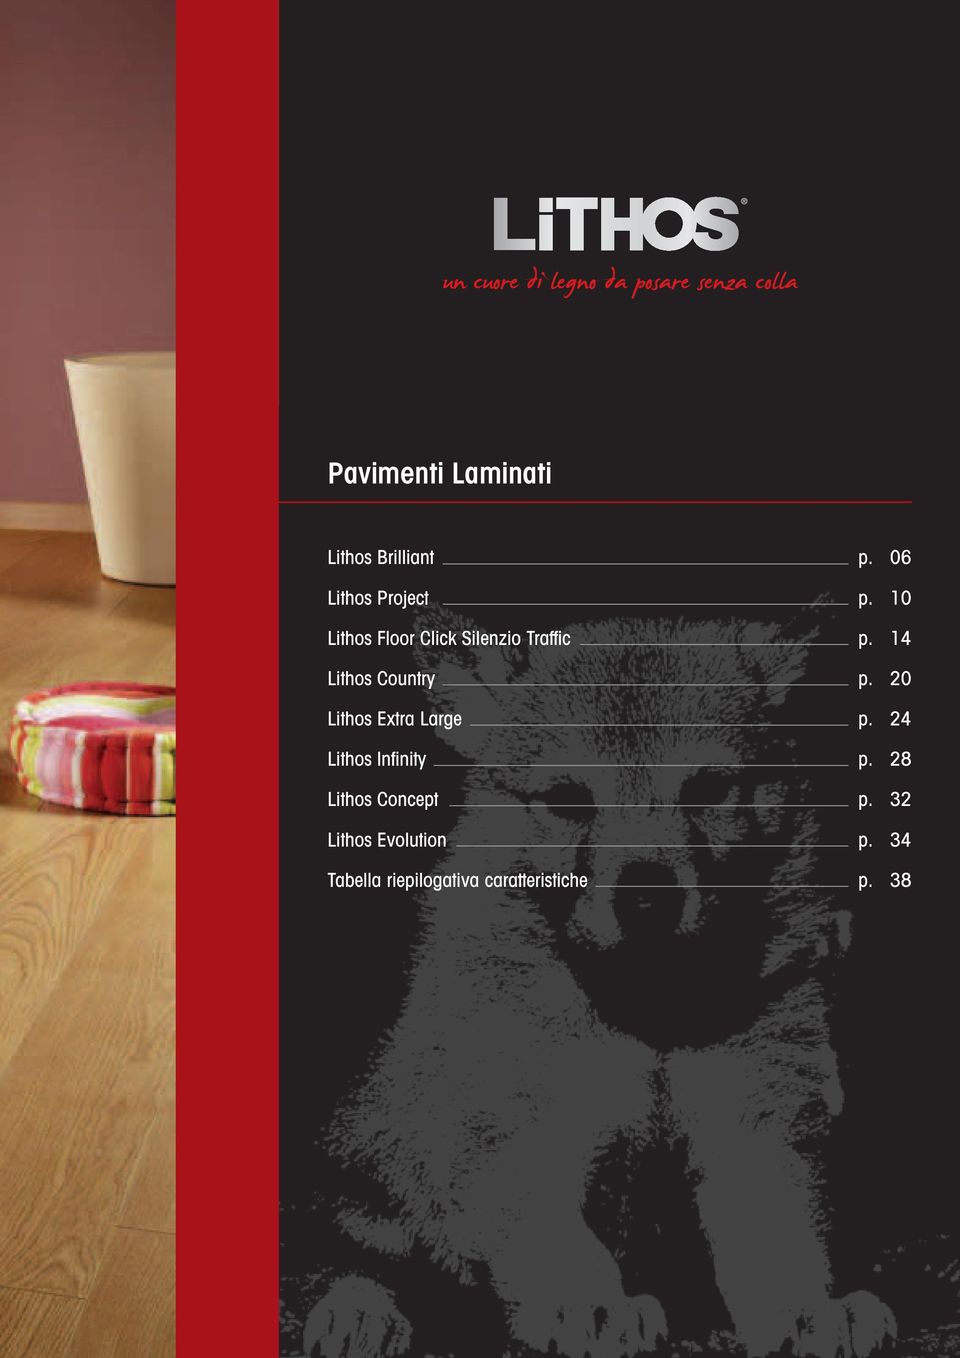 20 Lithos Extra Large p. 24 Lithos Infinity p.